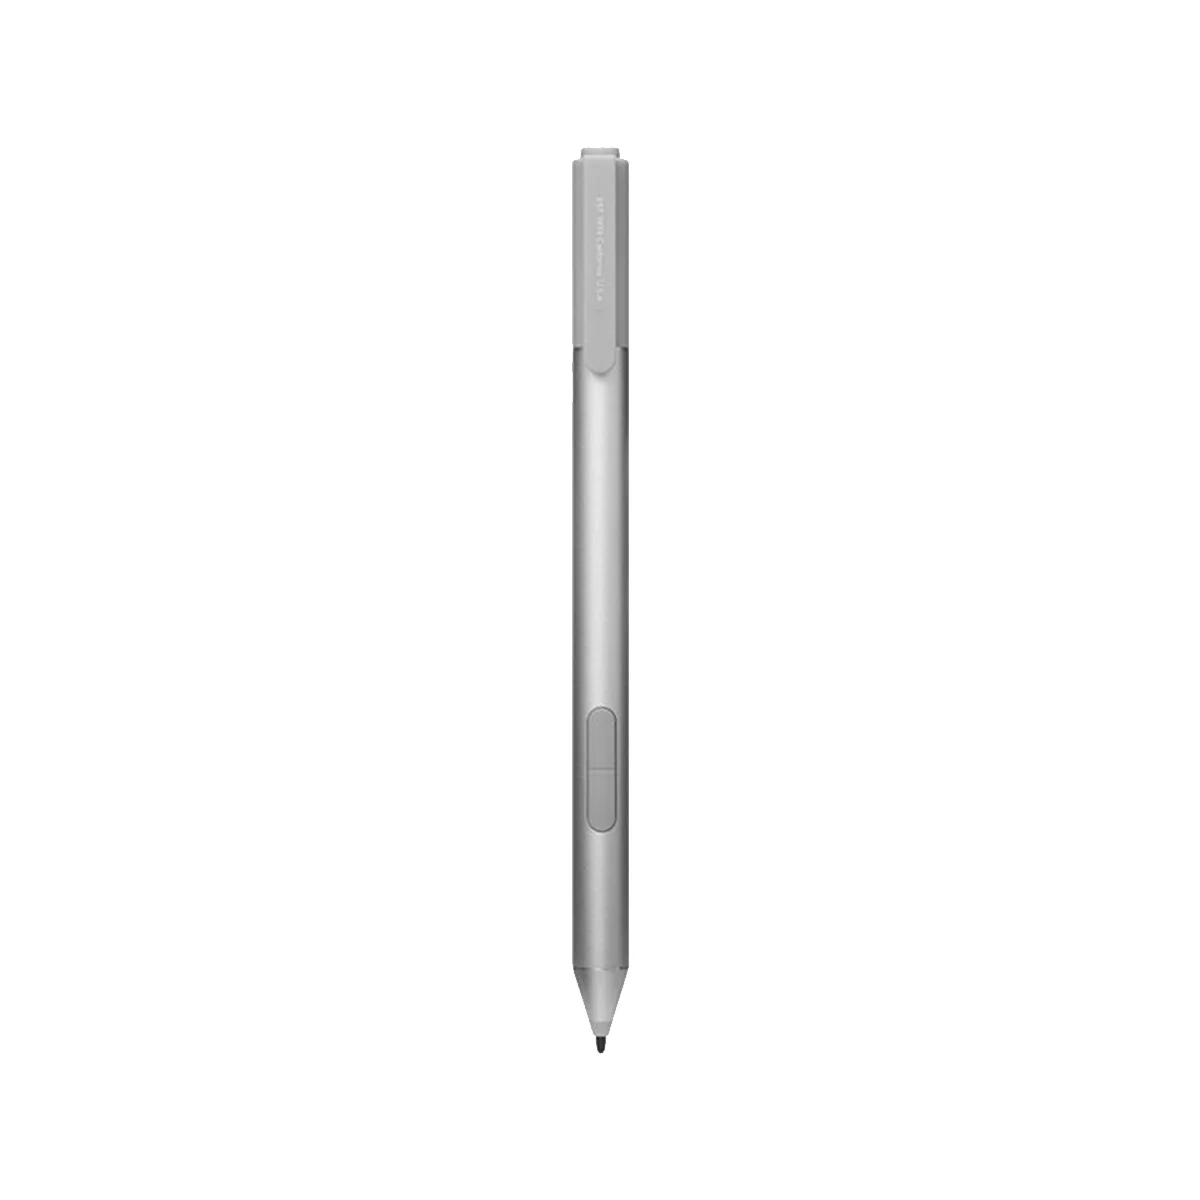 Active Pen Bluetooth T4Z24AA Stylus Pen for HP Elite X2 612 1012 G2 G1 EliteBook X360 1030 G2 1020 G2 Sprout Pro G2